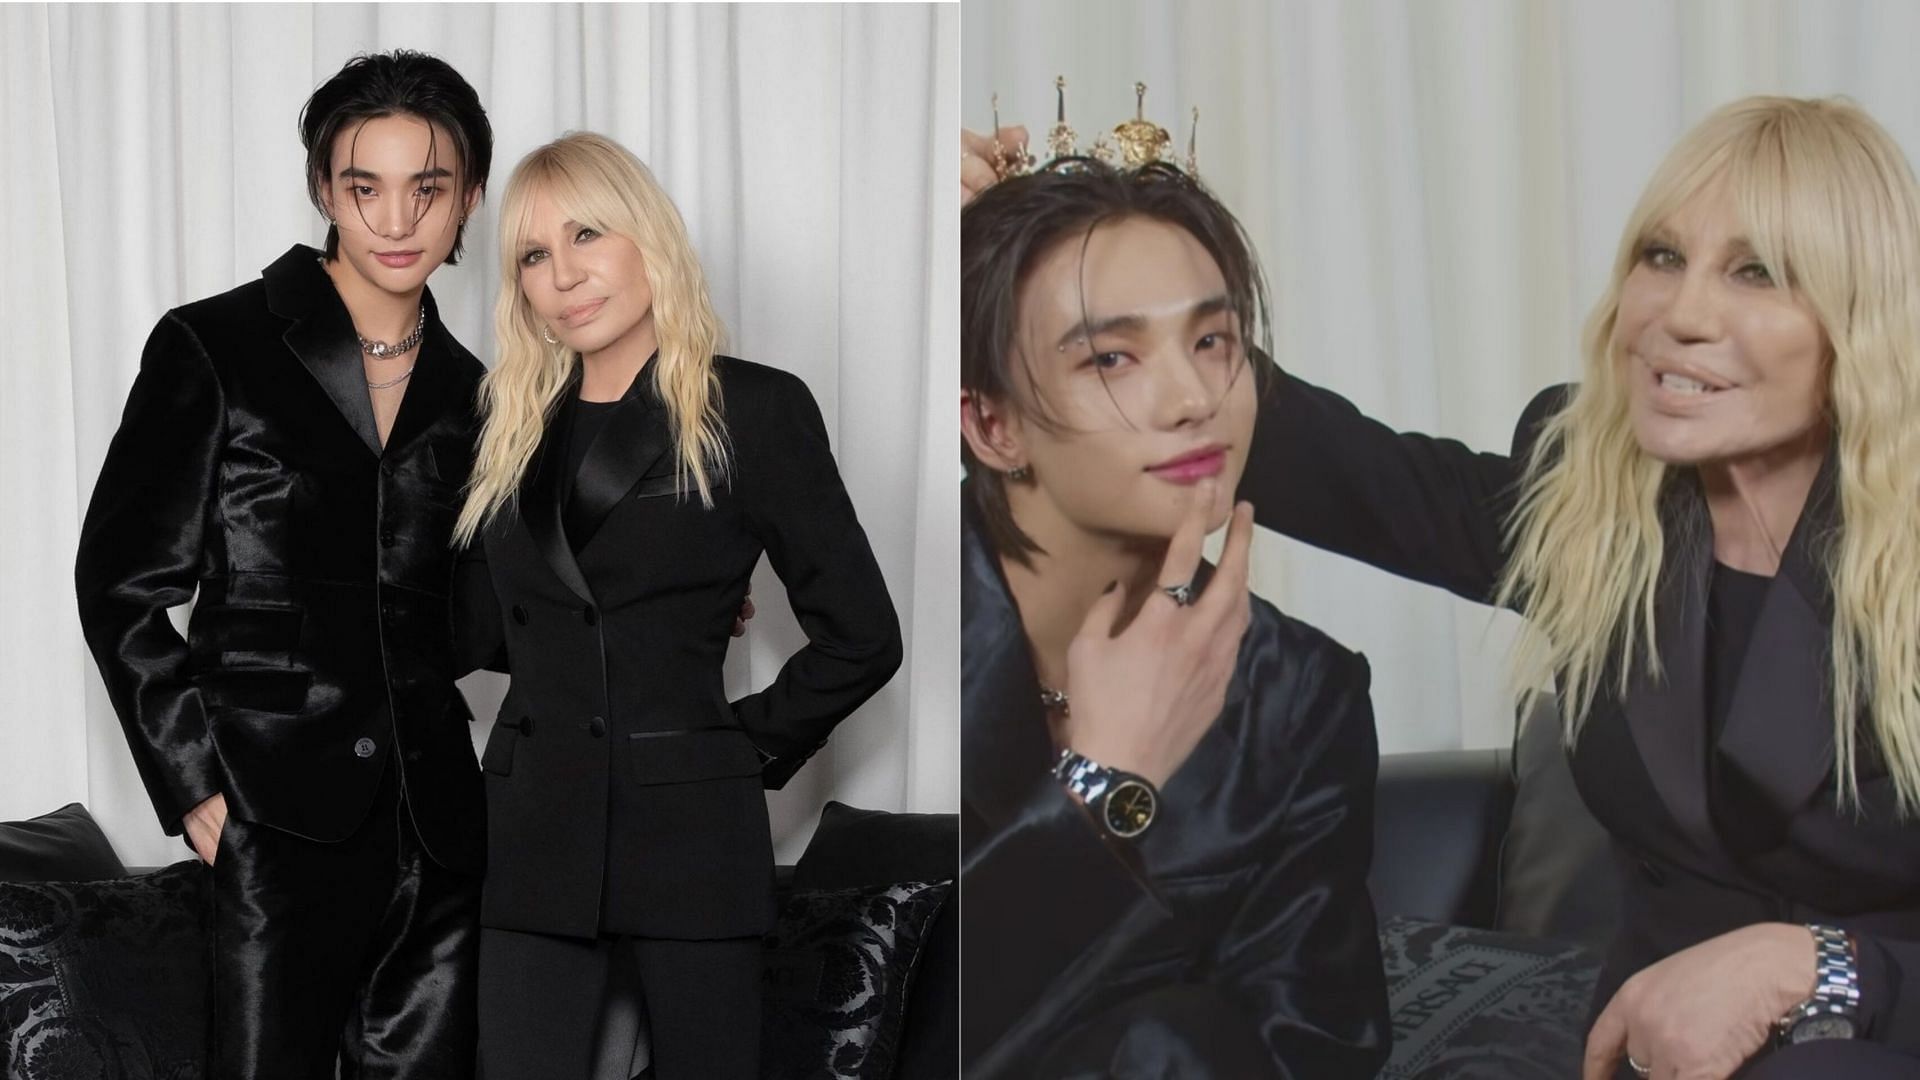 STRAY KIDS Hyunjin with Donatella Versace (Images via Instagram/@donatella_versace)